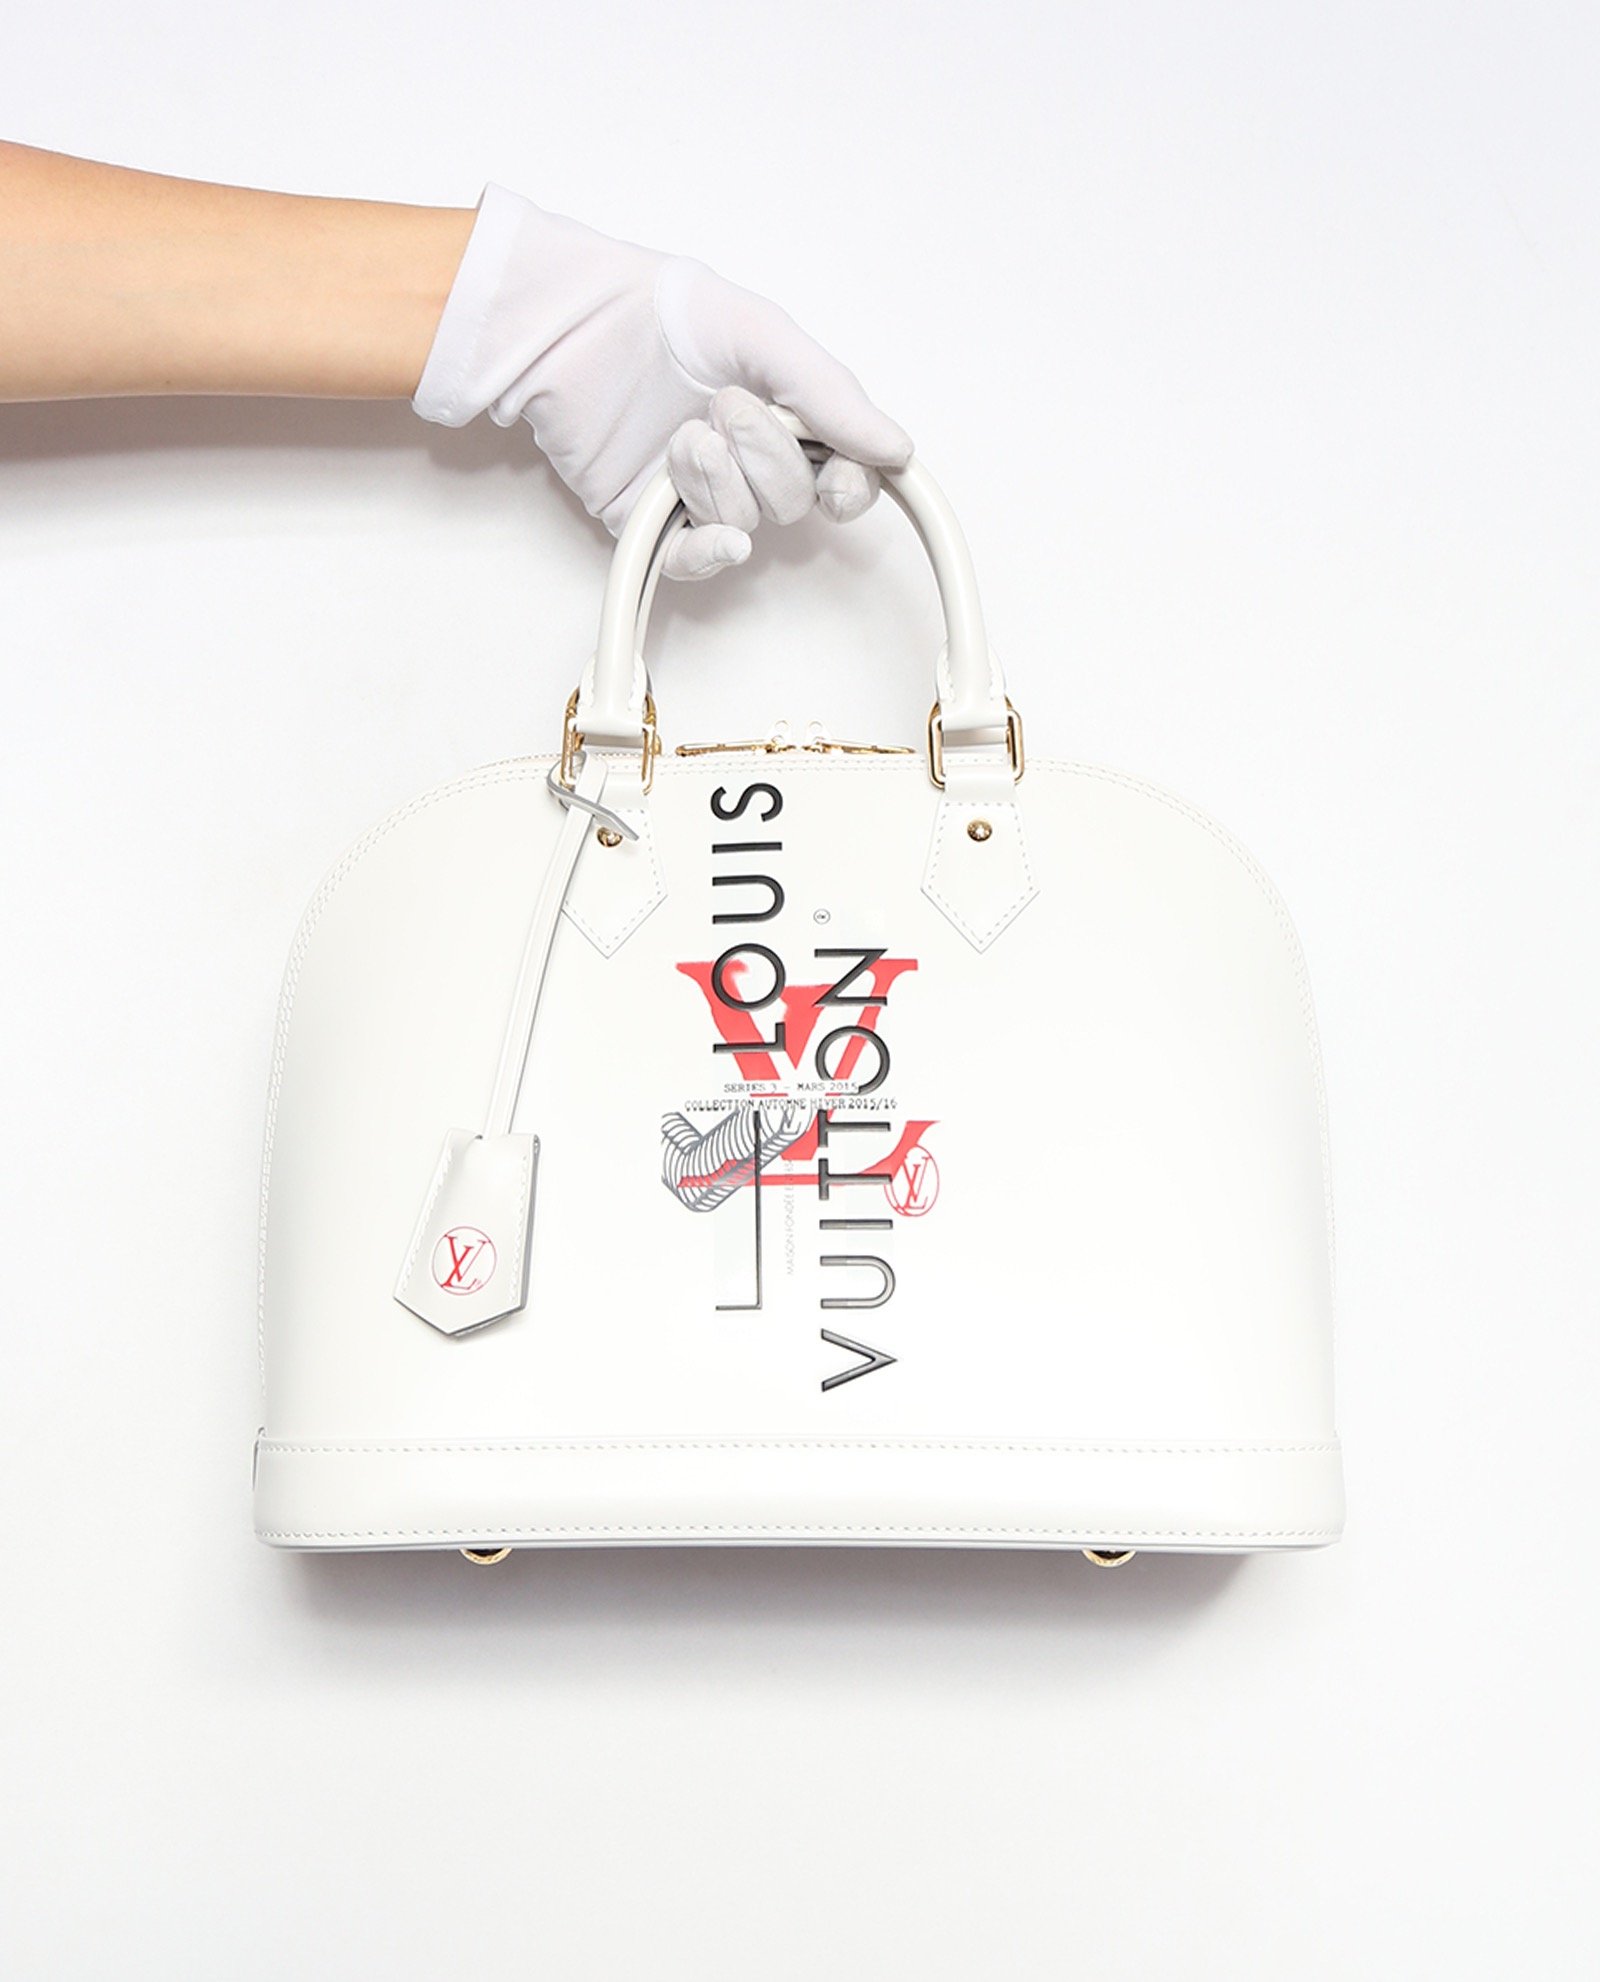 Chanel shopping bag vs Louis Vuitton Alma 🖤 thoughts